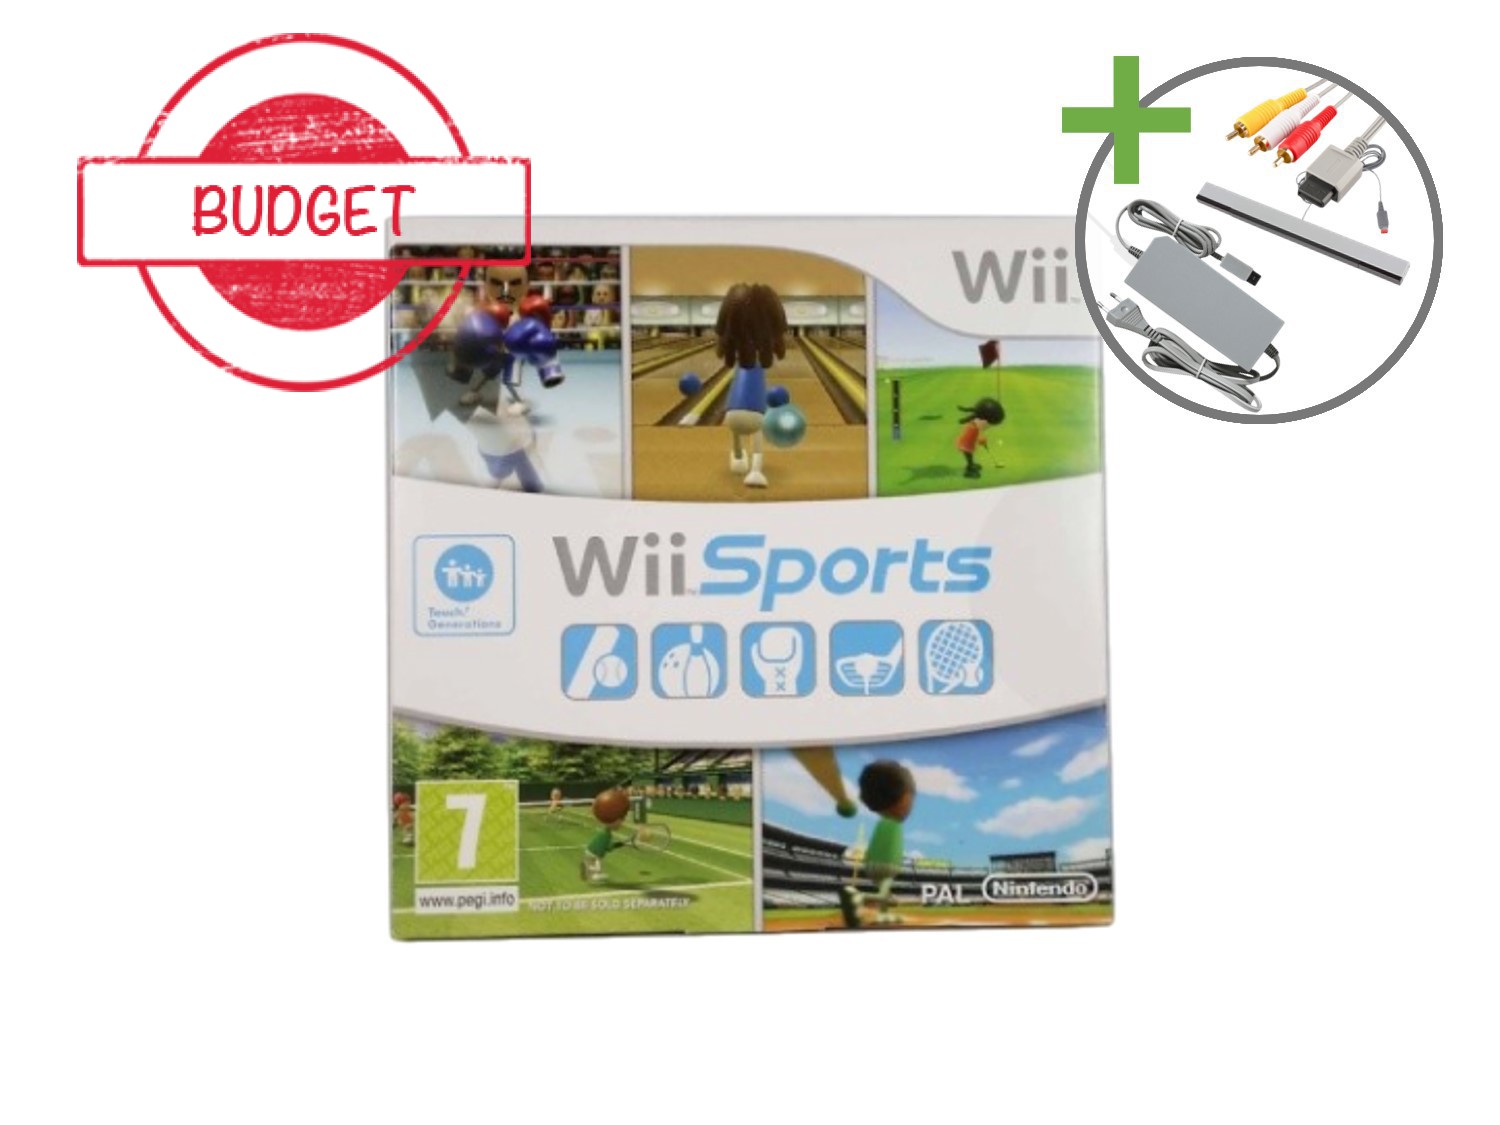 Nintendo Wii Starter Pack - Wii Sports Edition - Budget - Wii Hardware - 4